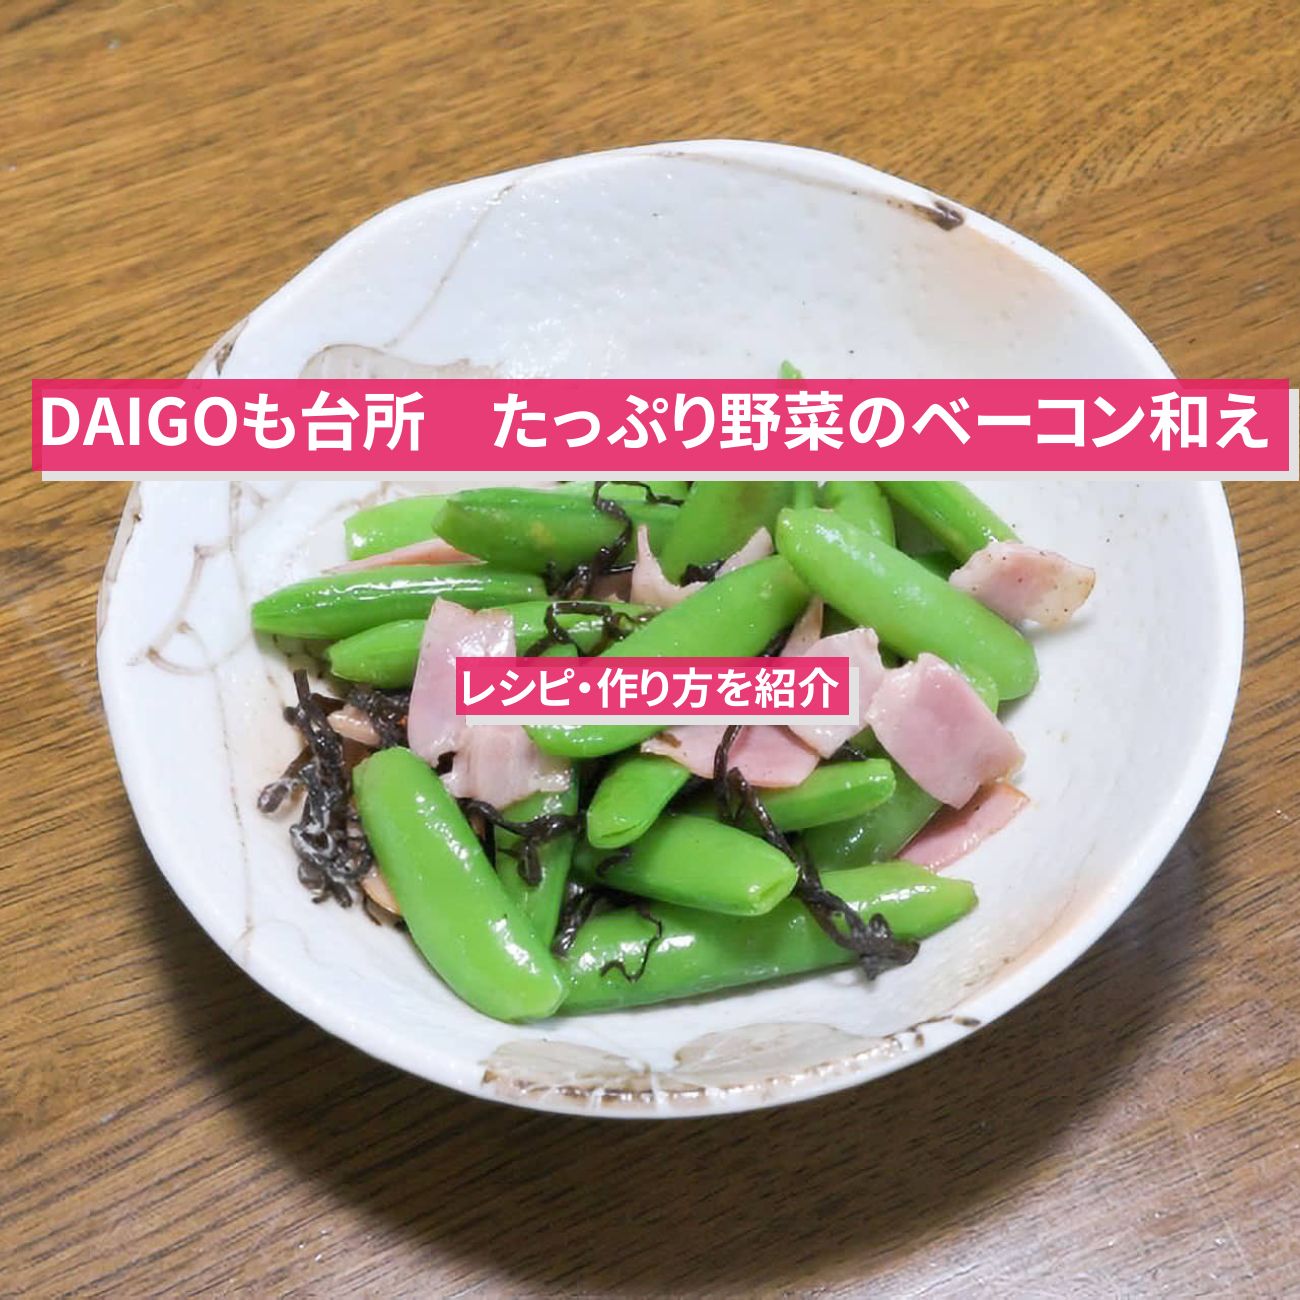 【DAIGOも台所】『たっぷり野菜のベーコン和え』のレシピ・作り方を紹介〔ダイゴも台所〕